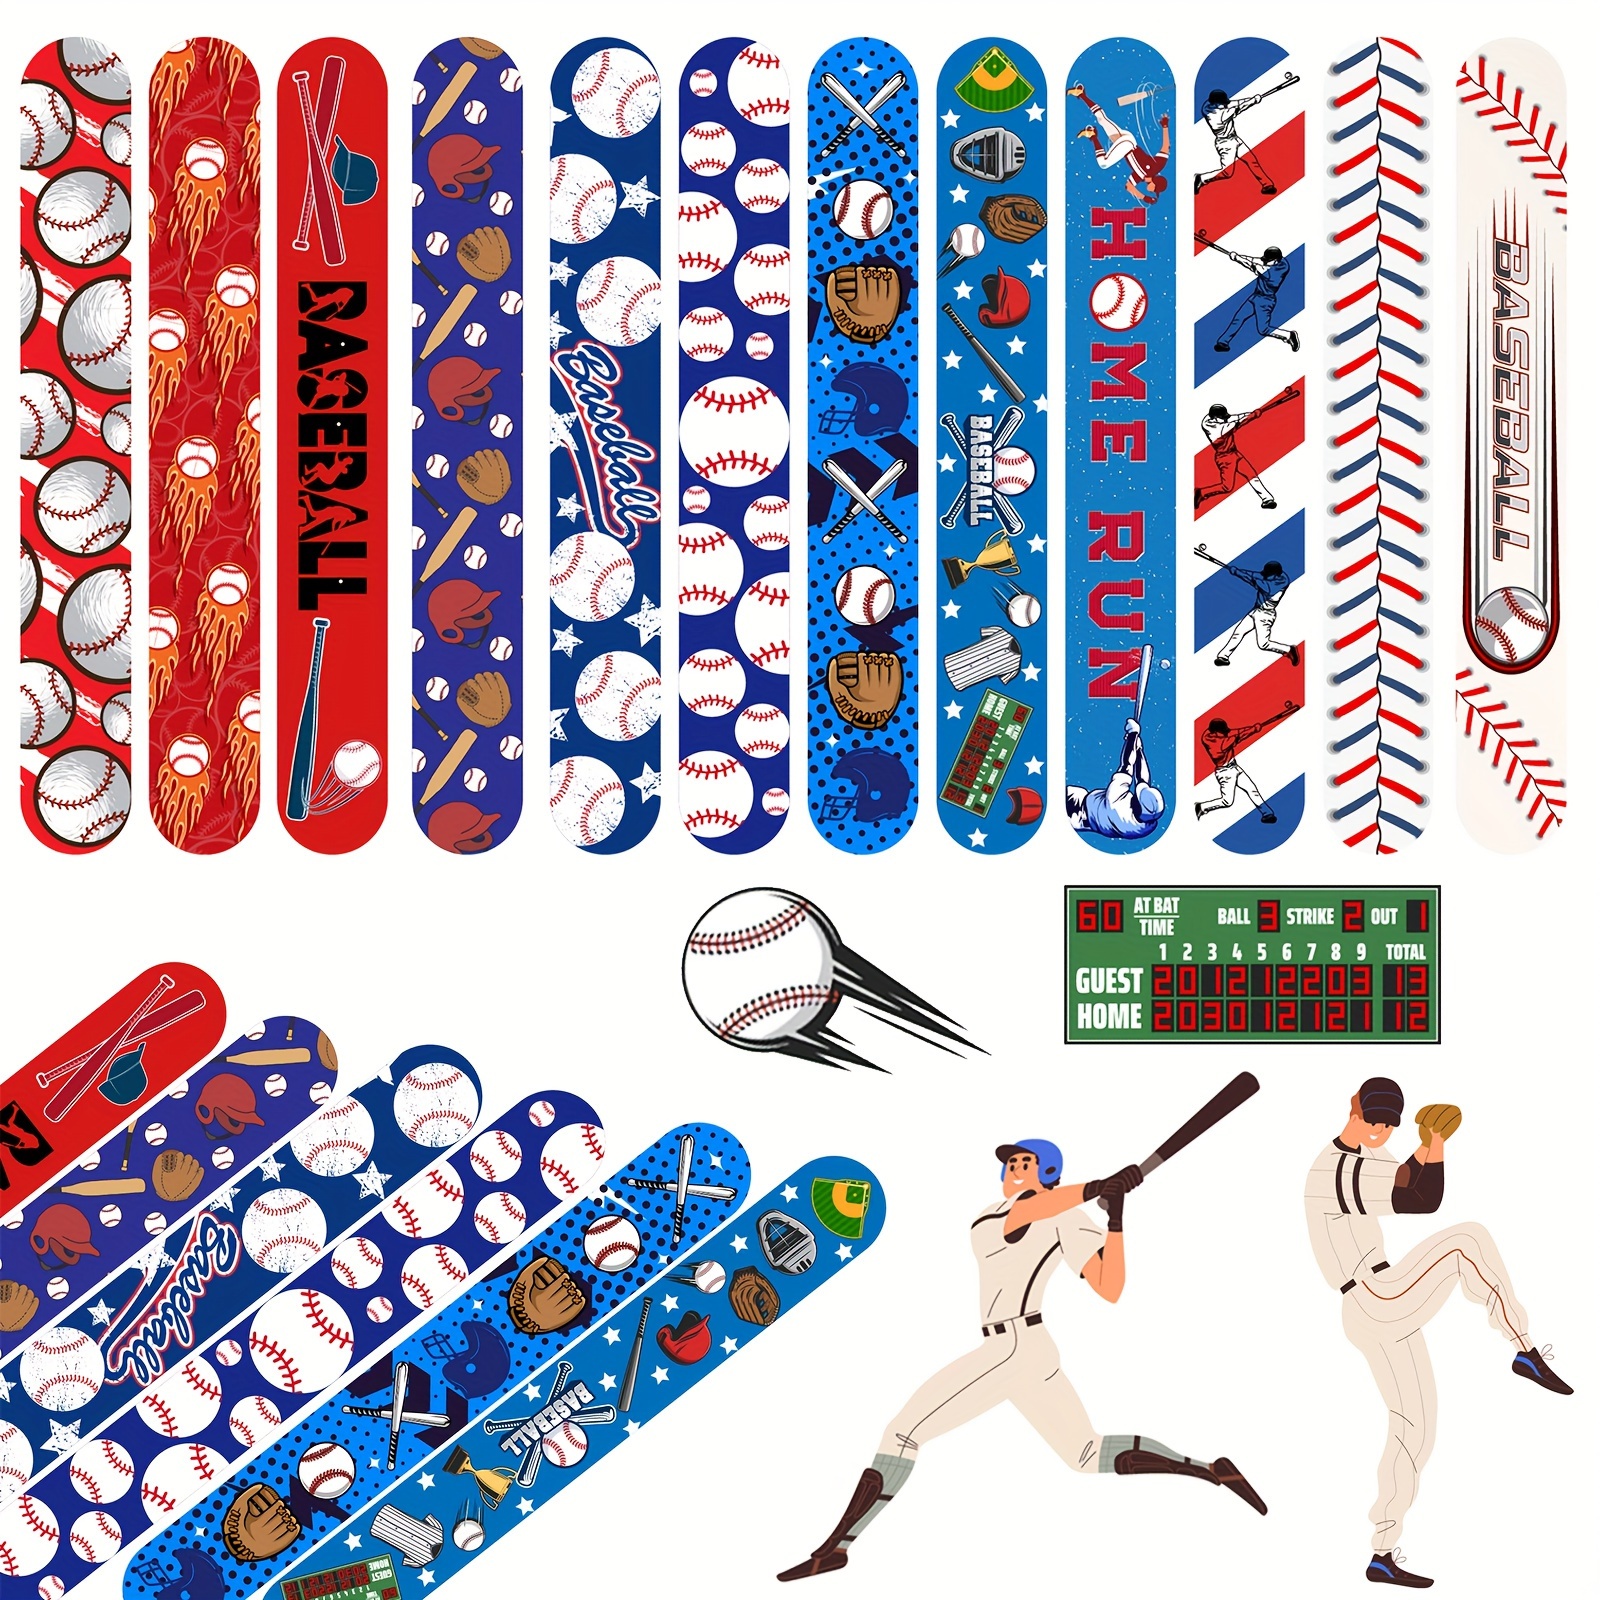 

24pcs/48pcs, Snap Bracelets Wristbands With Baseball Elements, Sport Slap Bracelets For Baseball Party Favors, Classroom Prizes, Birthday Gifts, Toys For Kids